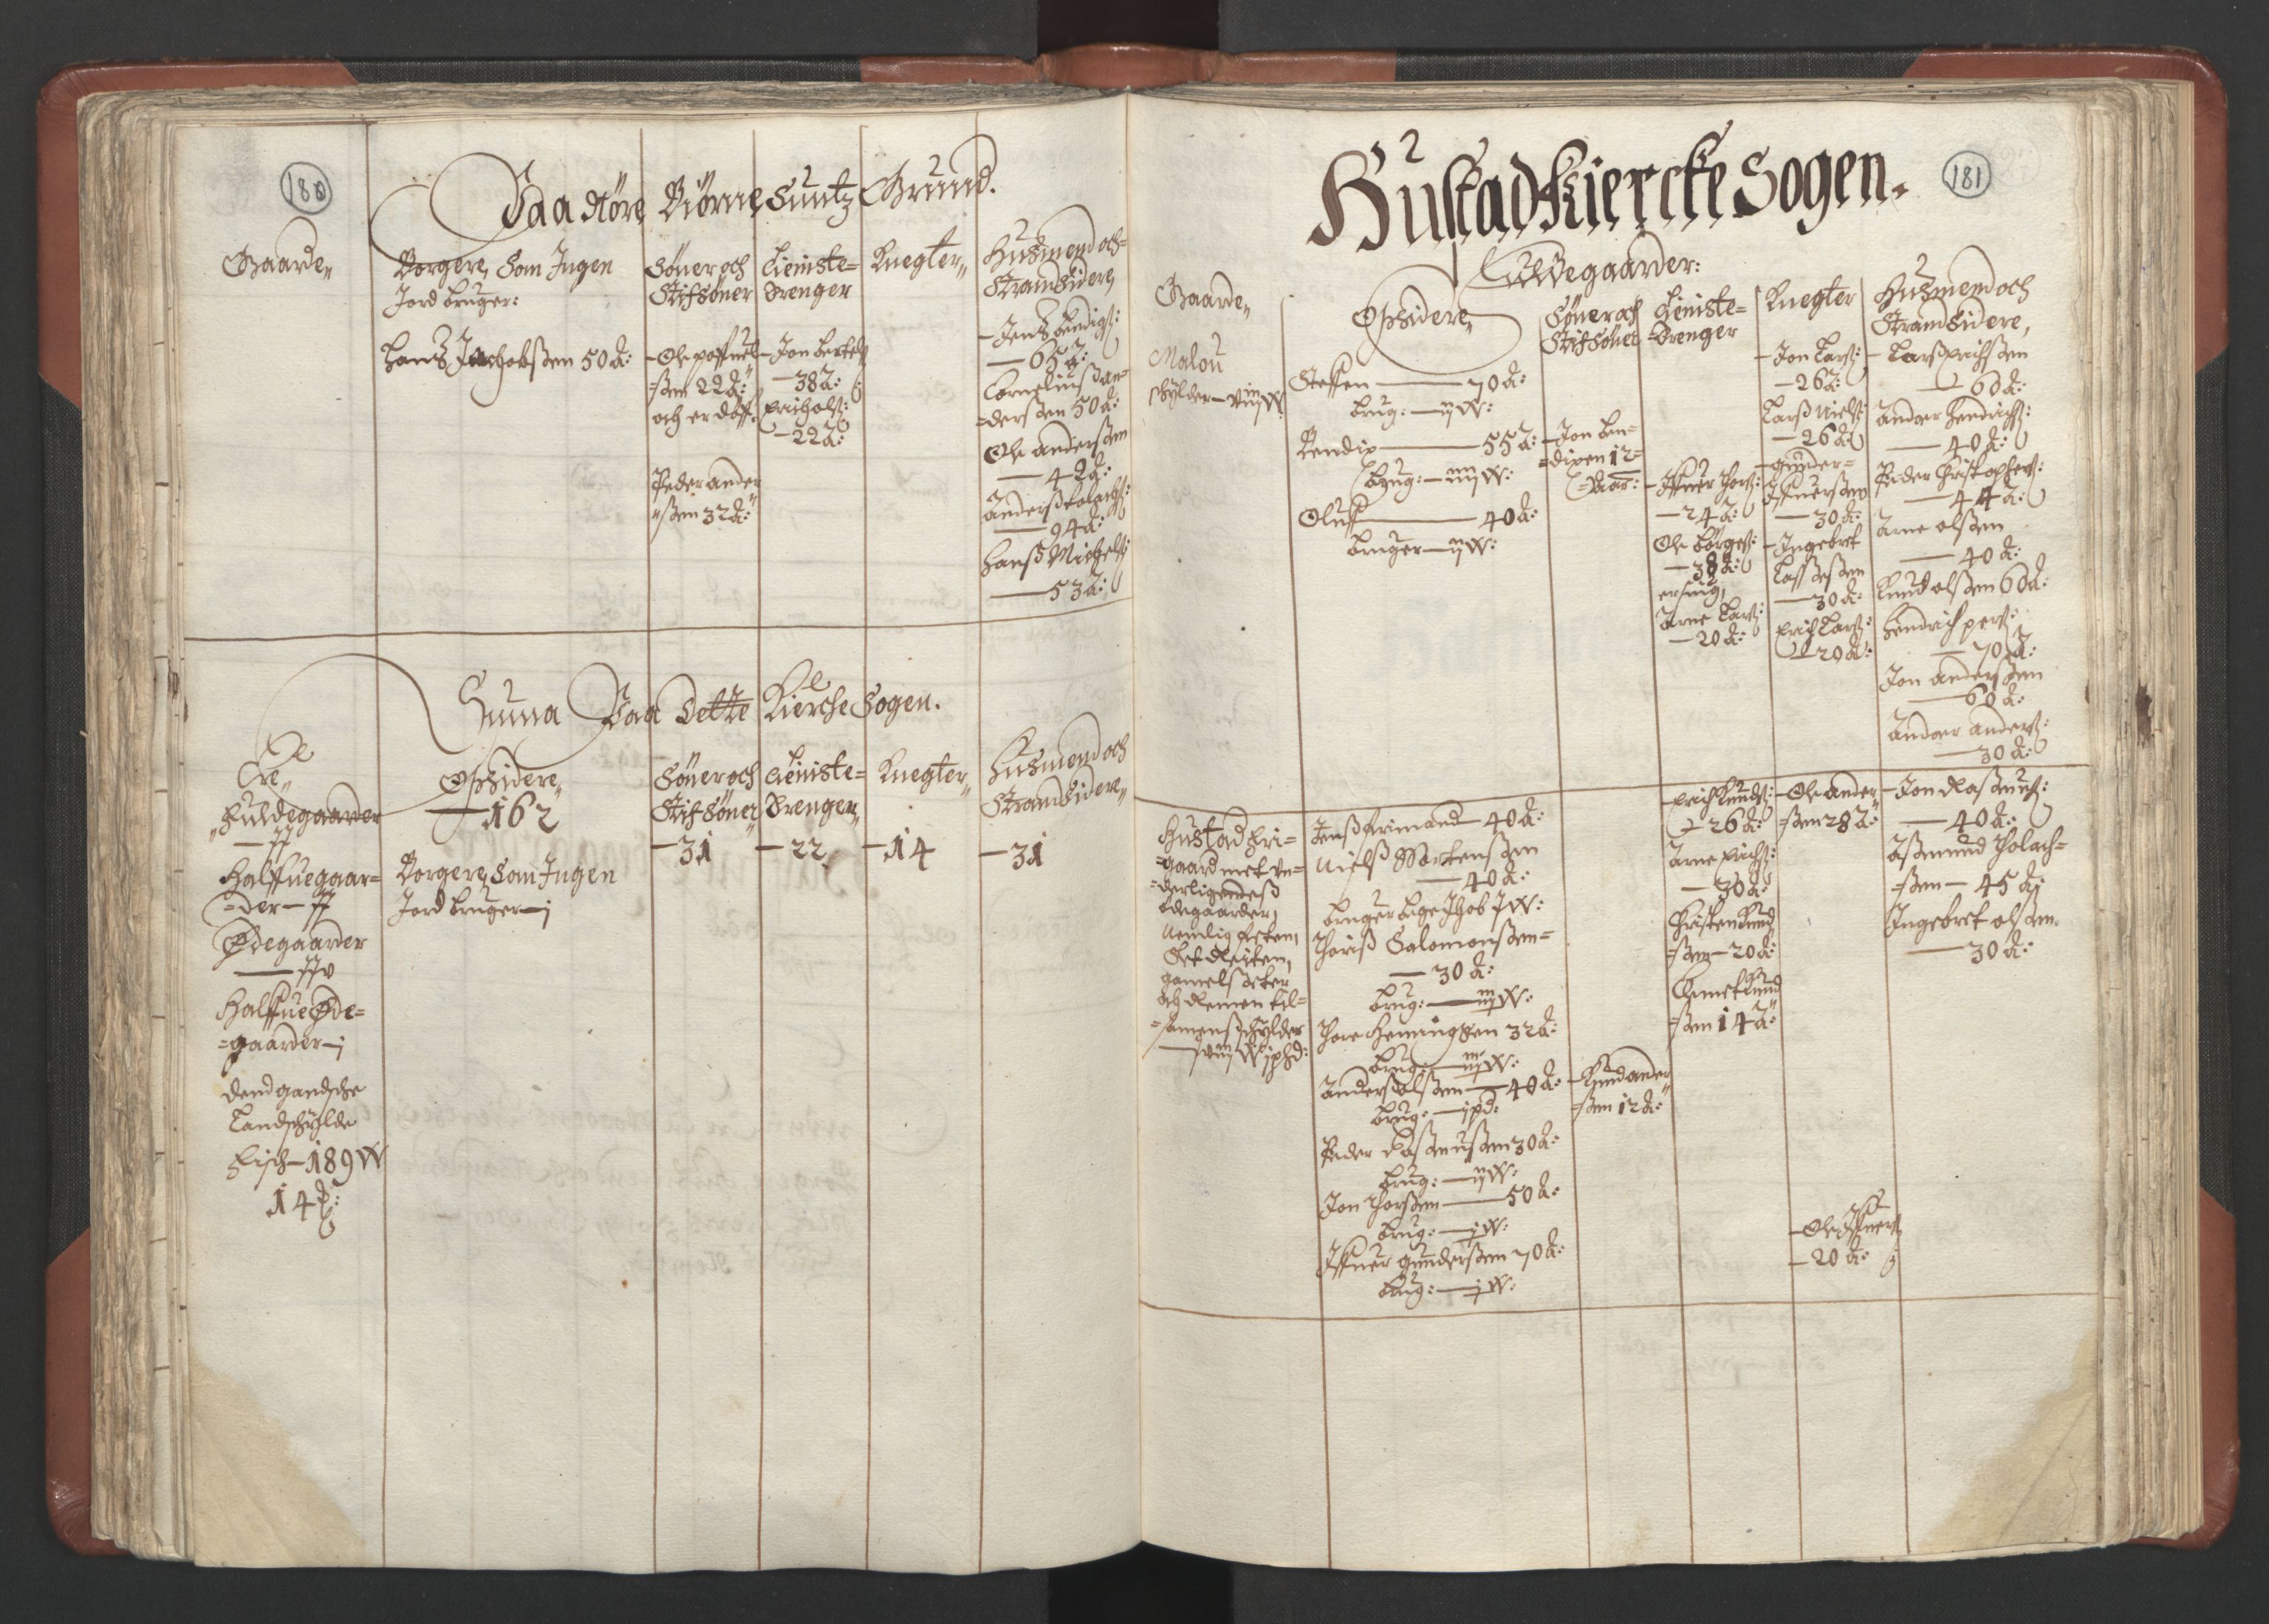 RA, Fogdenes og sorenskrivernes manntall 1664-1666, nr. 16: Romsdal fogderi og Sunnmøre fogderi, 1664-1665, s. 180-181